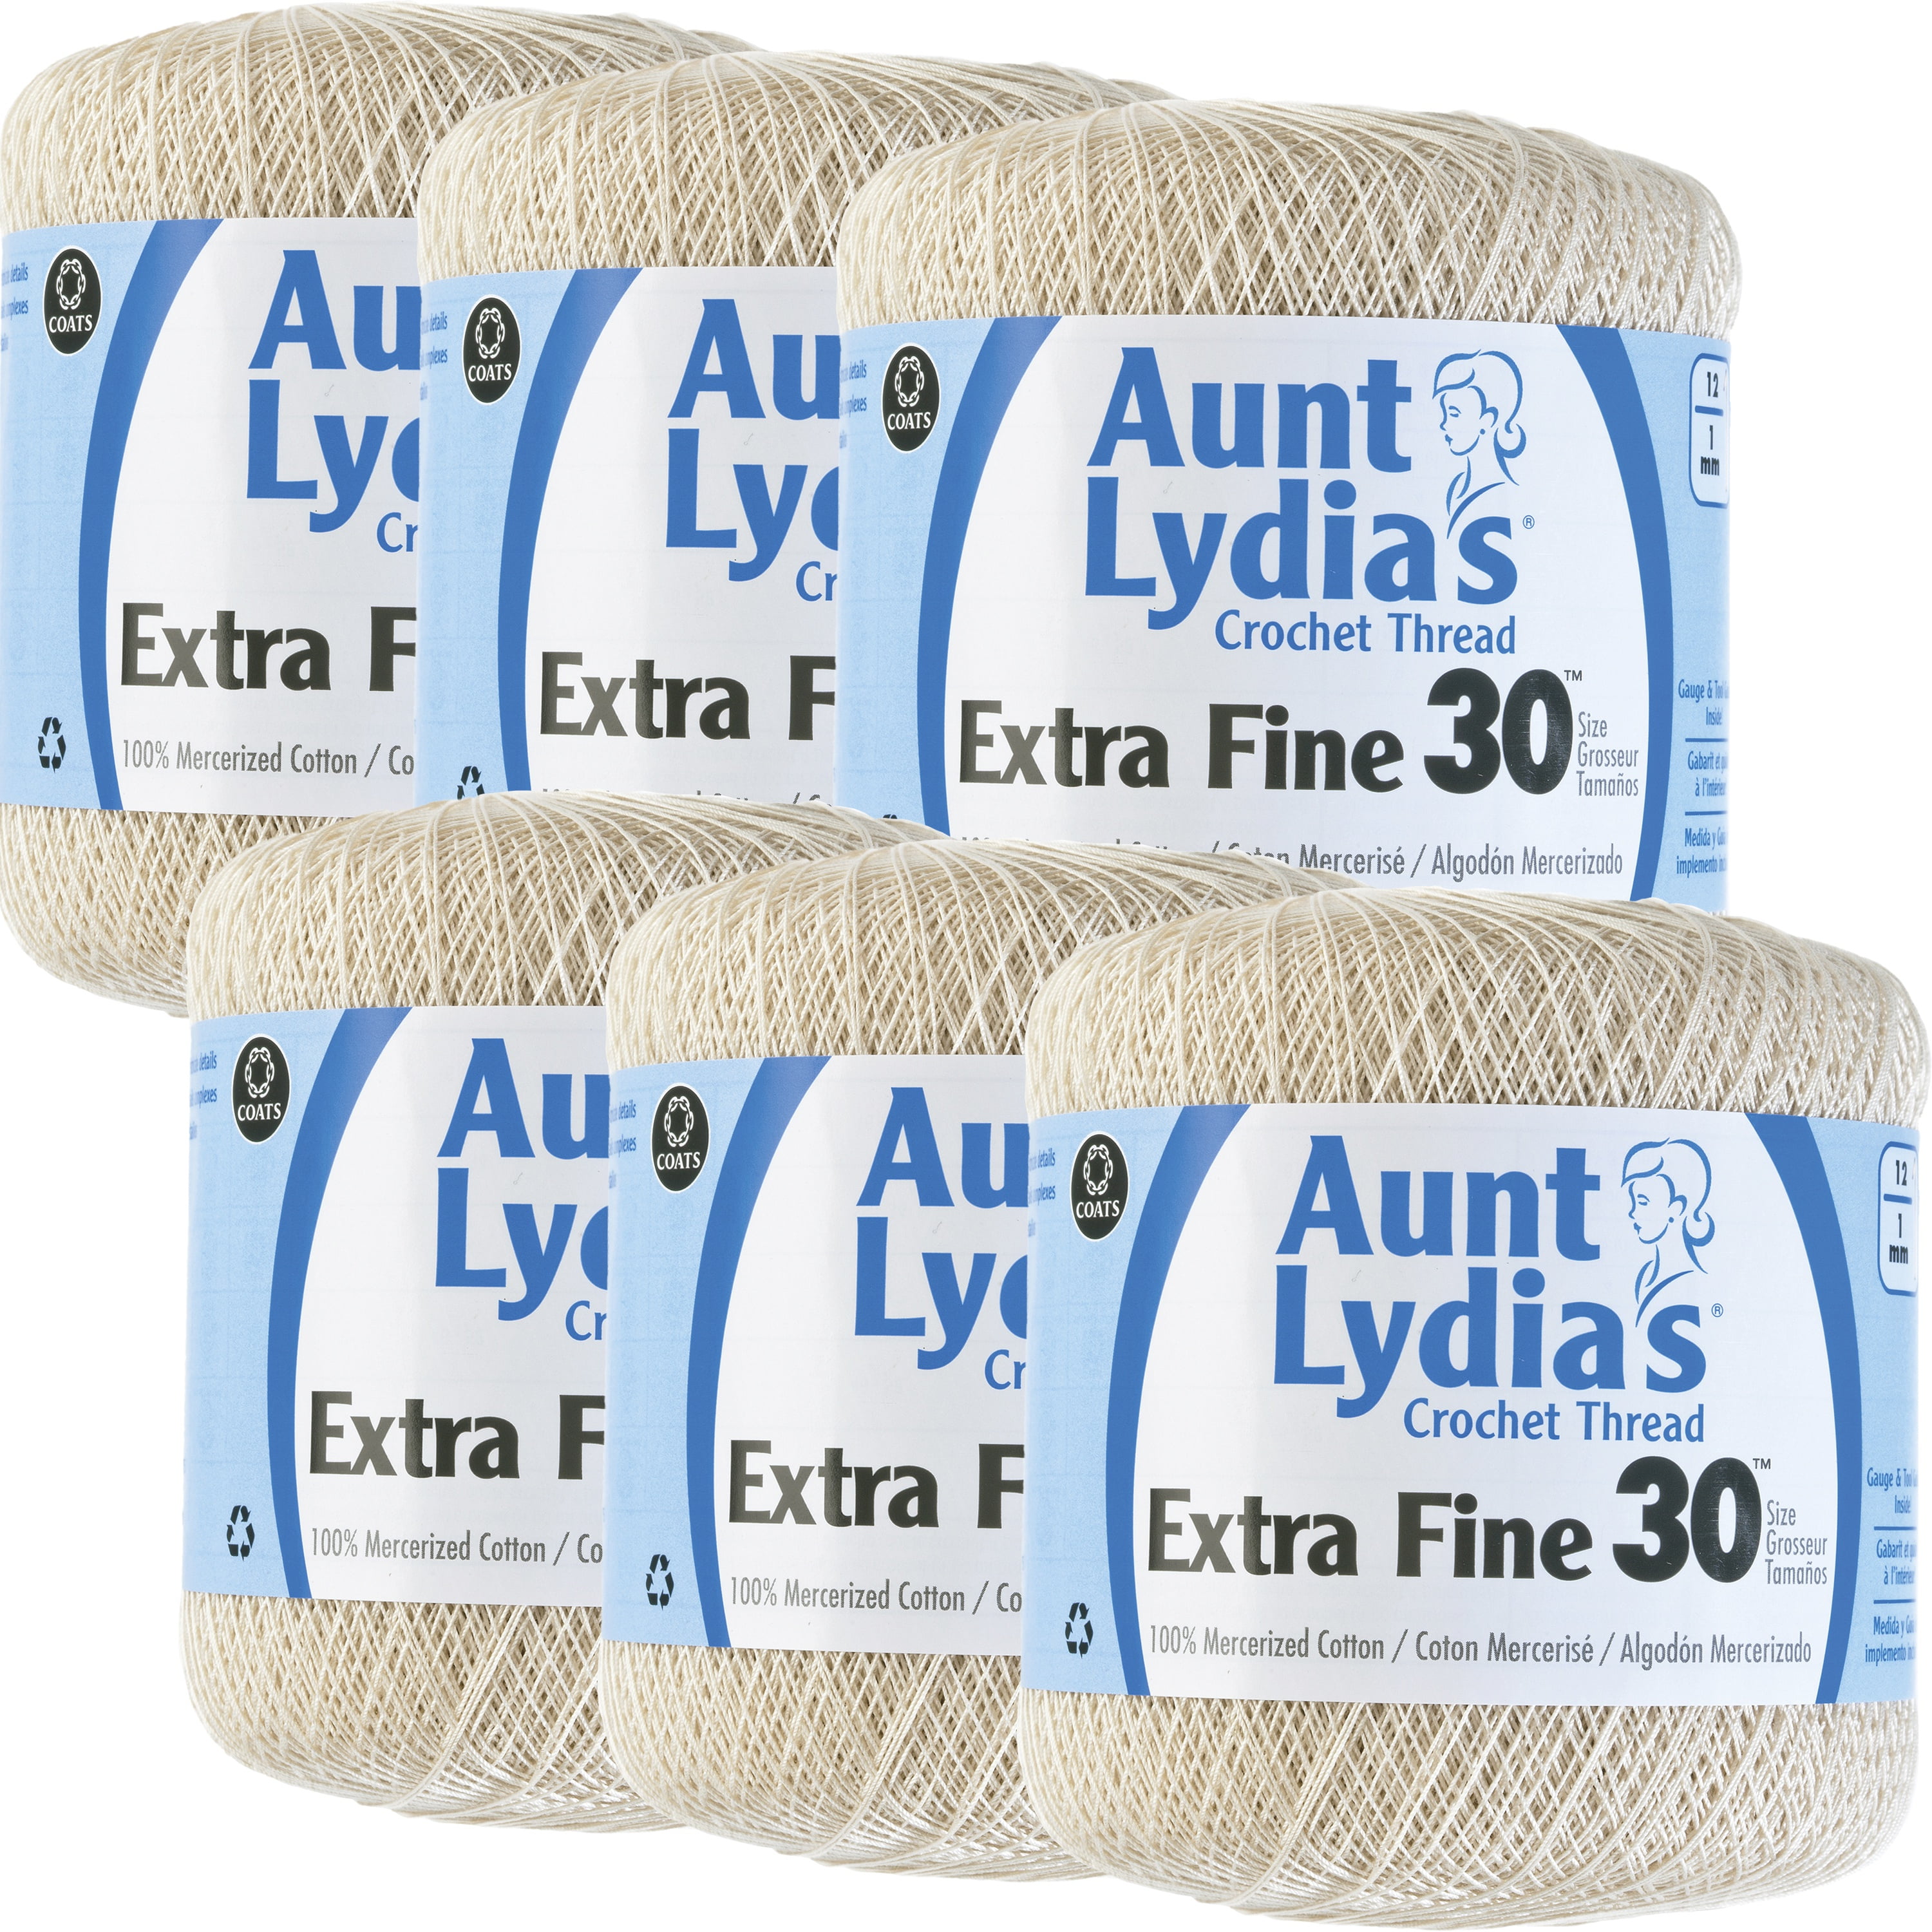 DMC Cordonnet Special Crochet Cotton Sizes 30-100 White and Ecru 